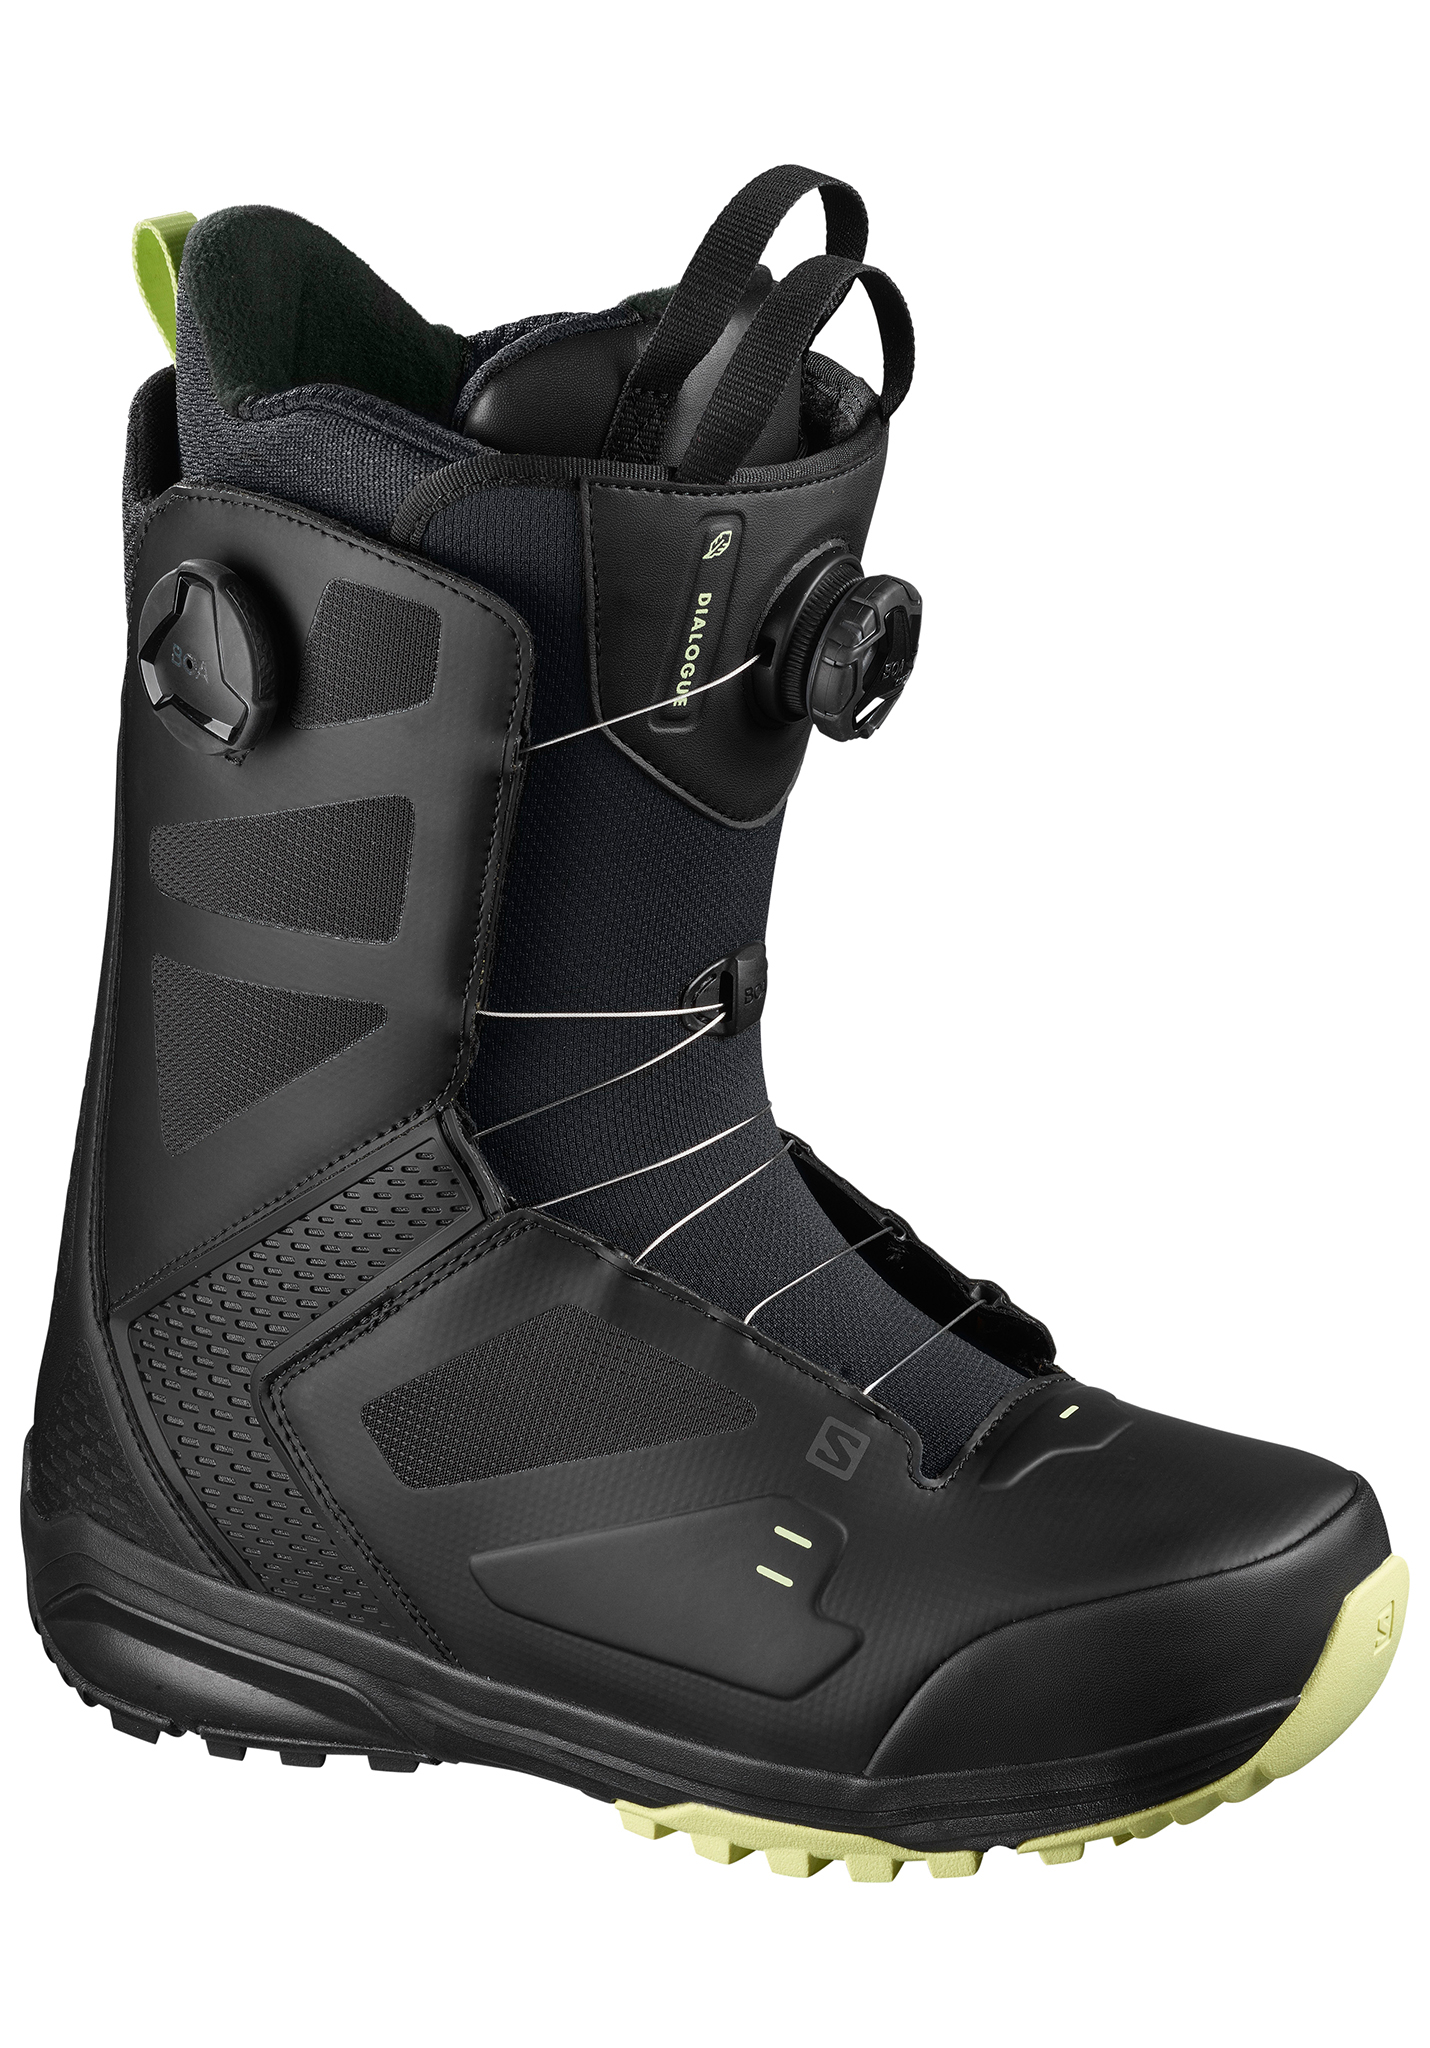 Salomon Dialogue Dual Boa All Mountain Snowboard Boots schwarz/schwarz/schmetterling 44